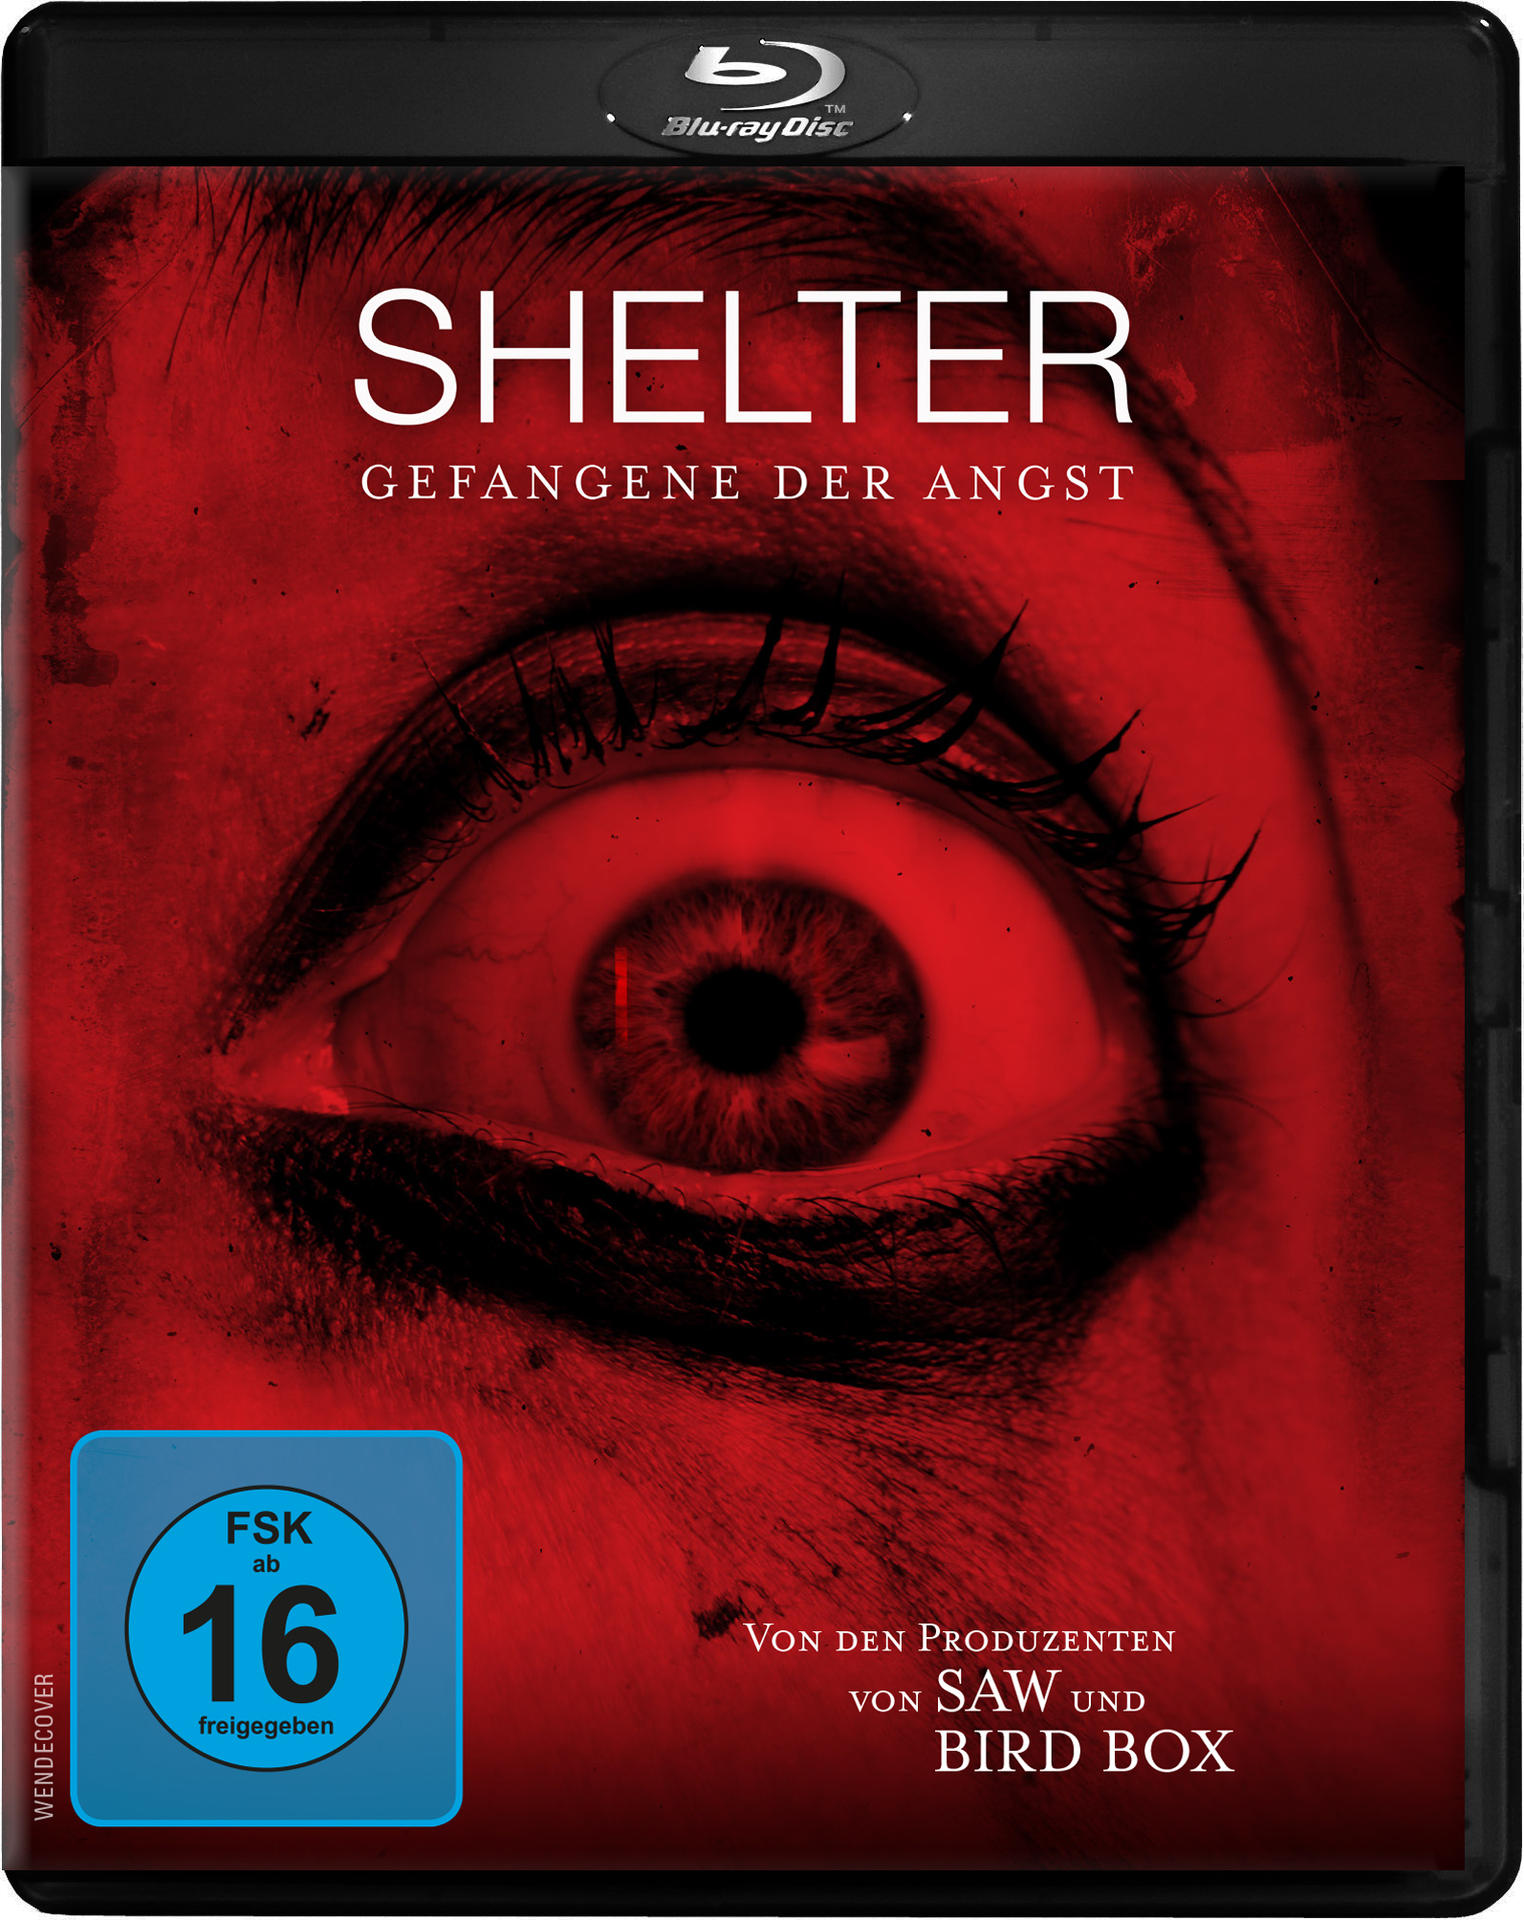 - Gefangene Blu-ray Angst der Shelter